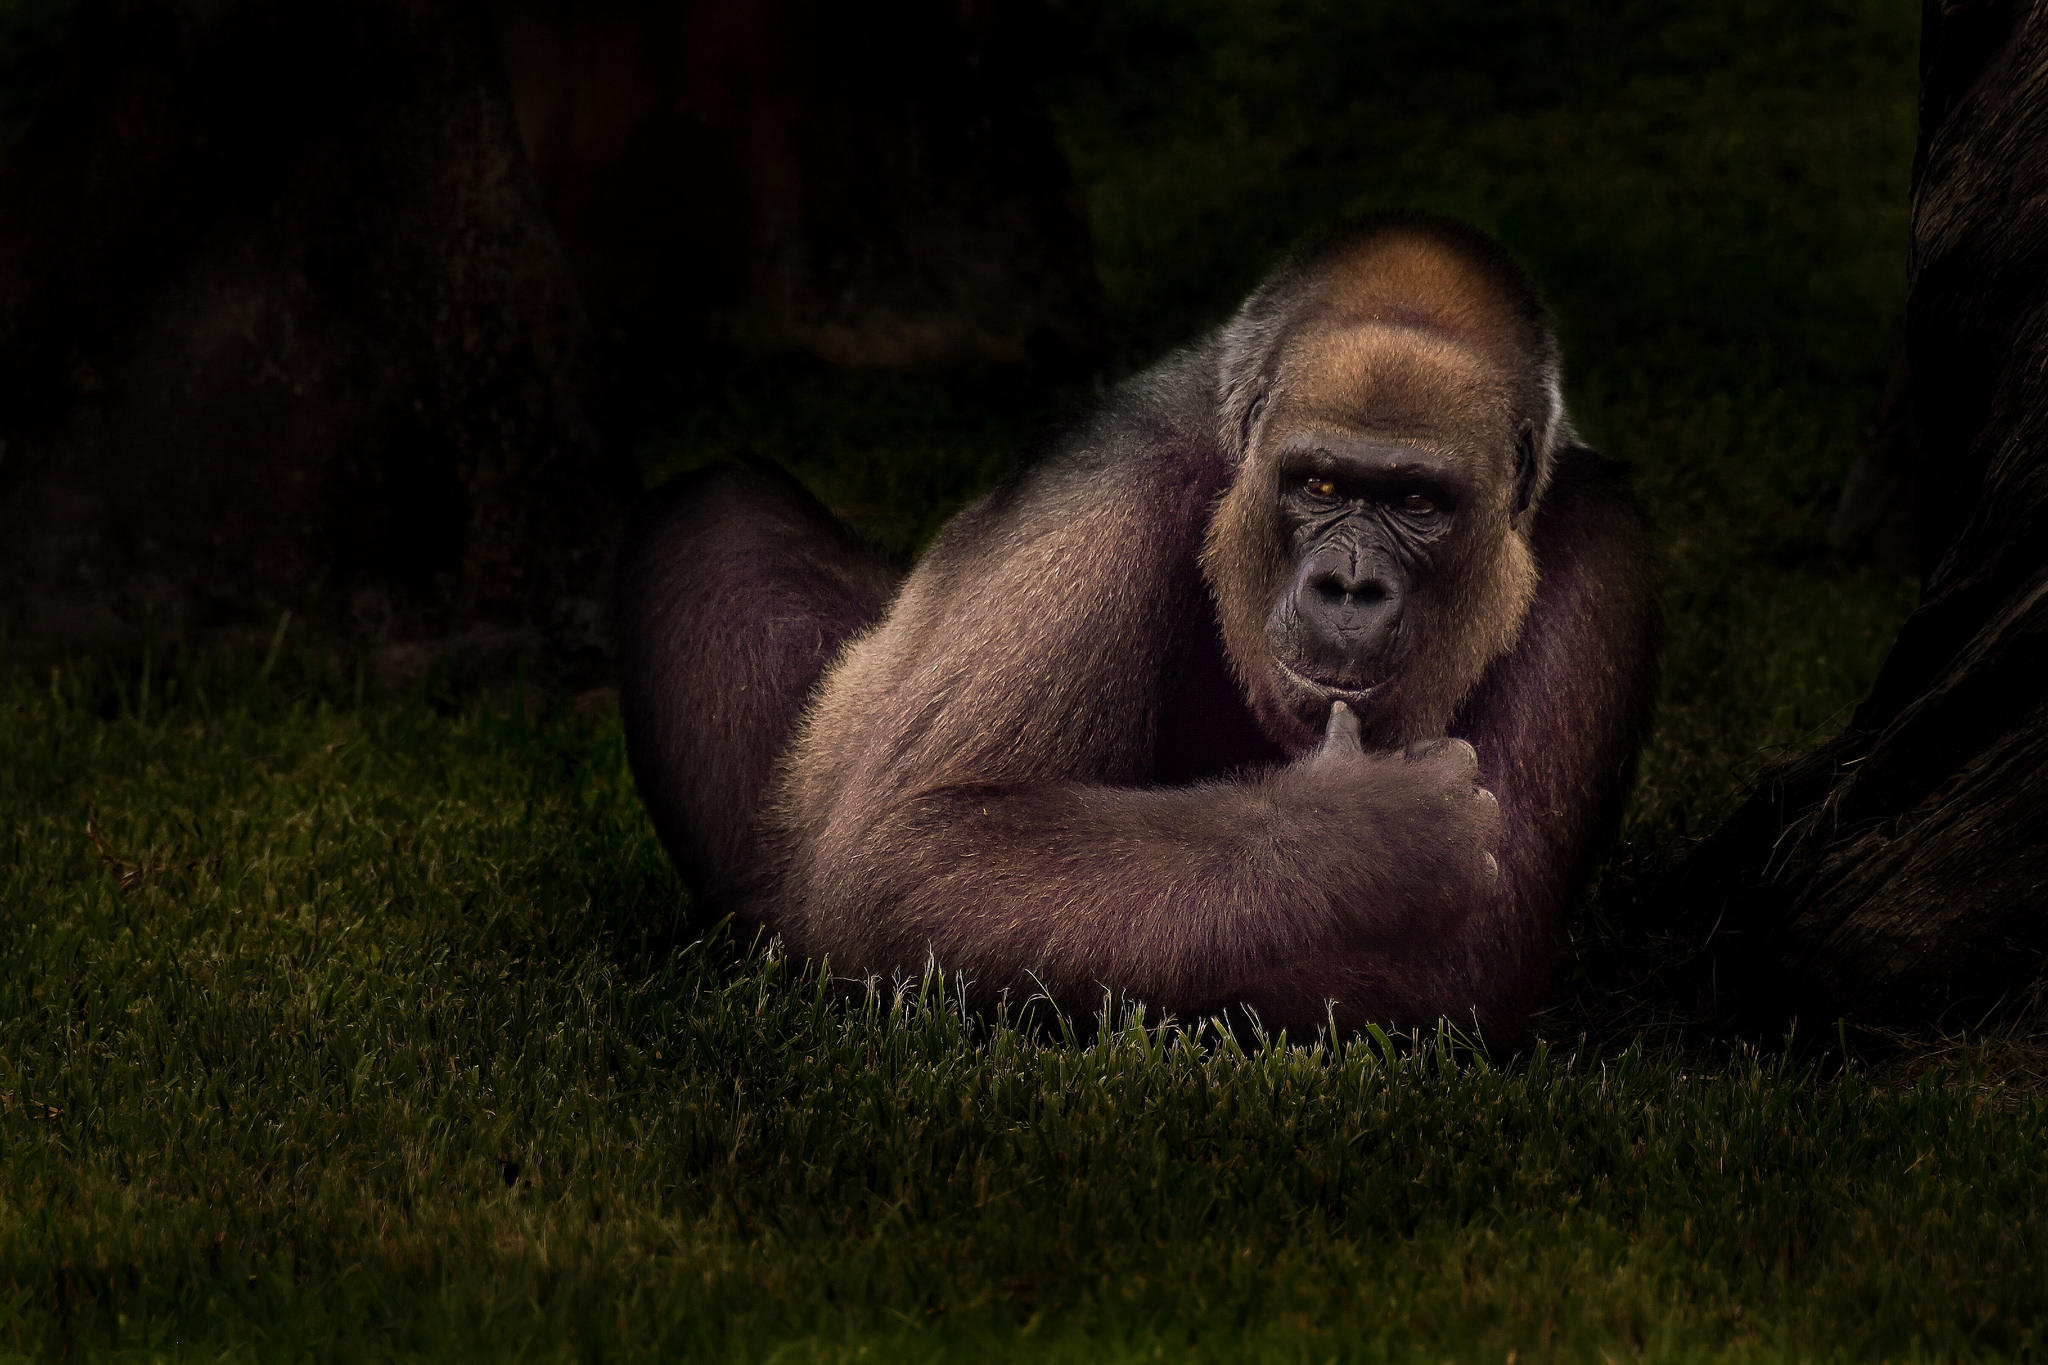 Wallpapers animal monkey orangutan on the desktop